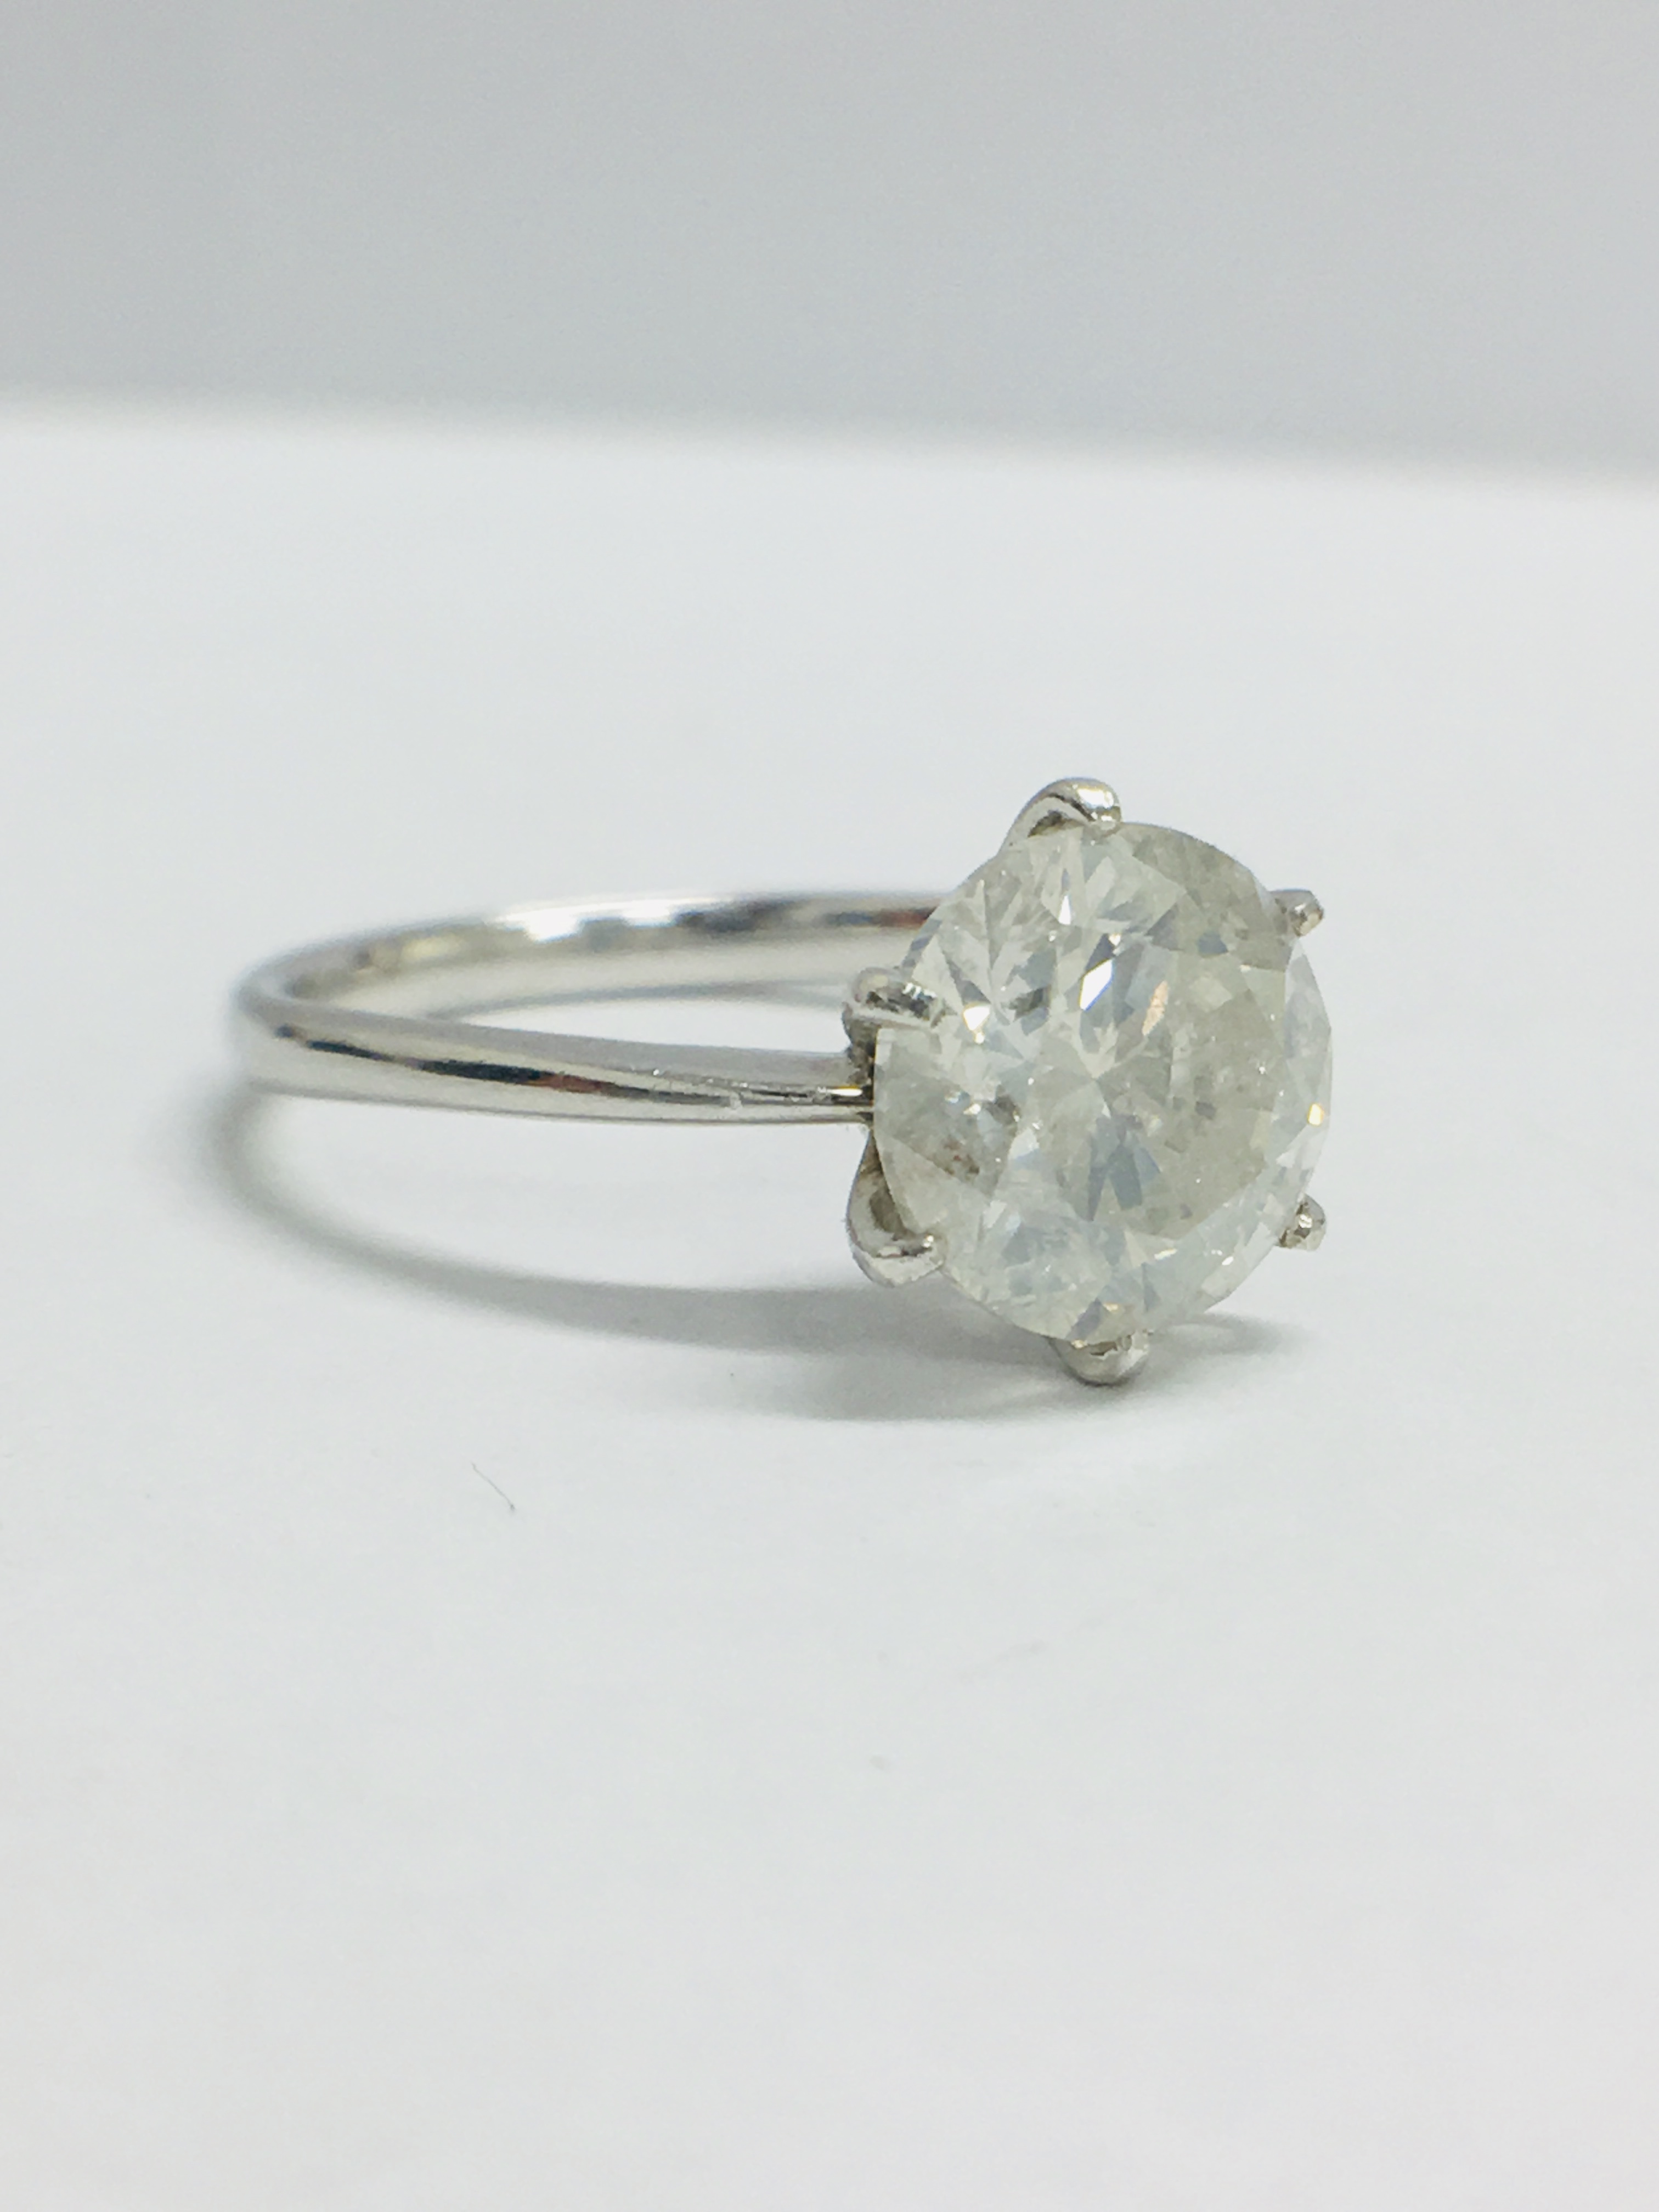 1.80ct diamond solitaire ring set in Platinum setting - Image 8 of 10